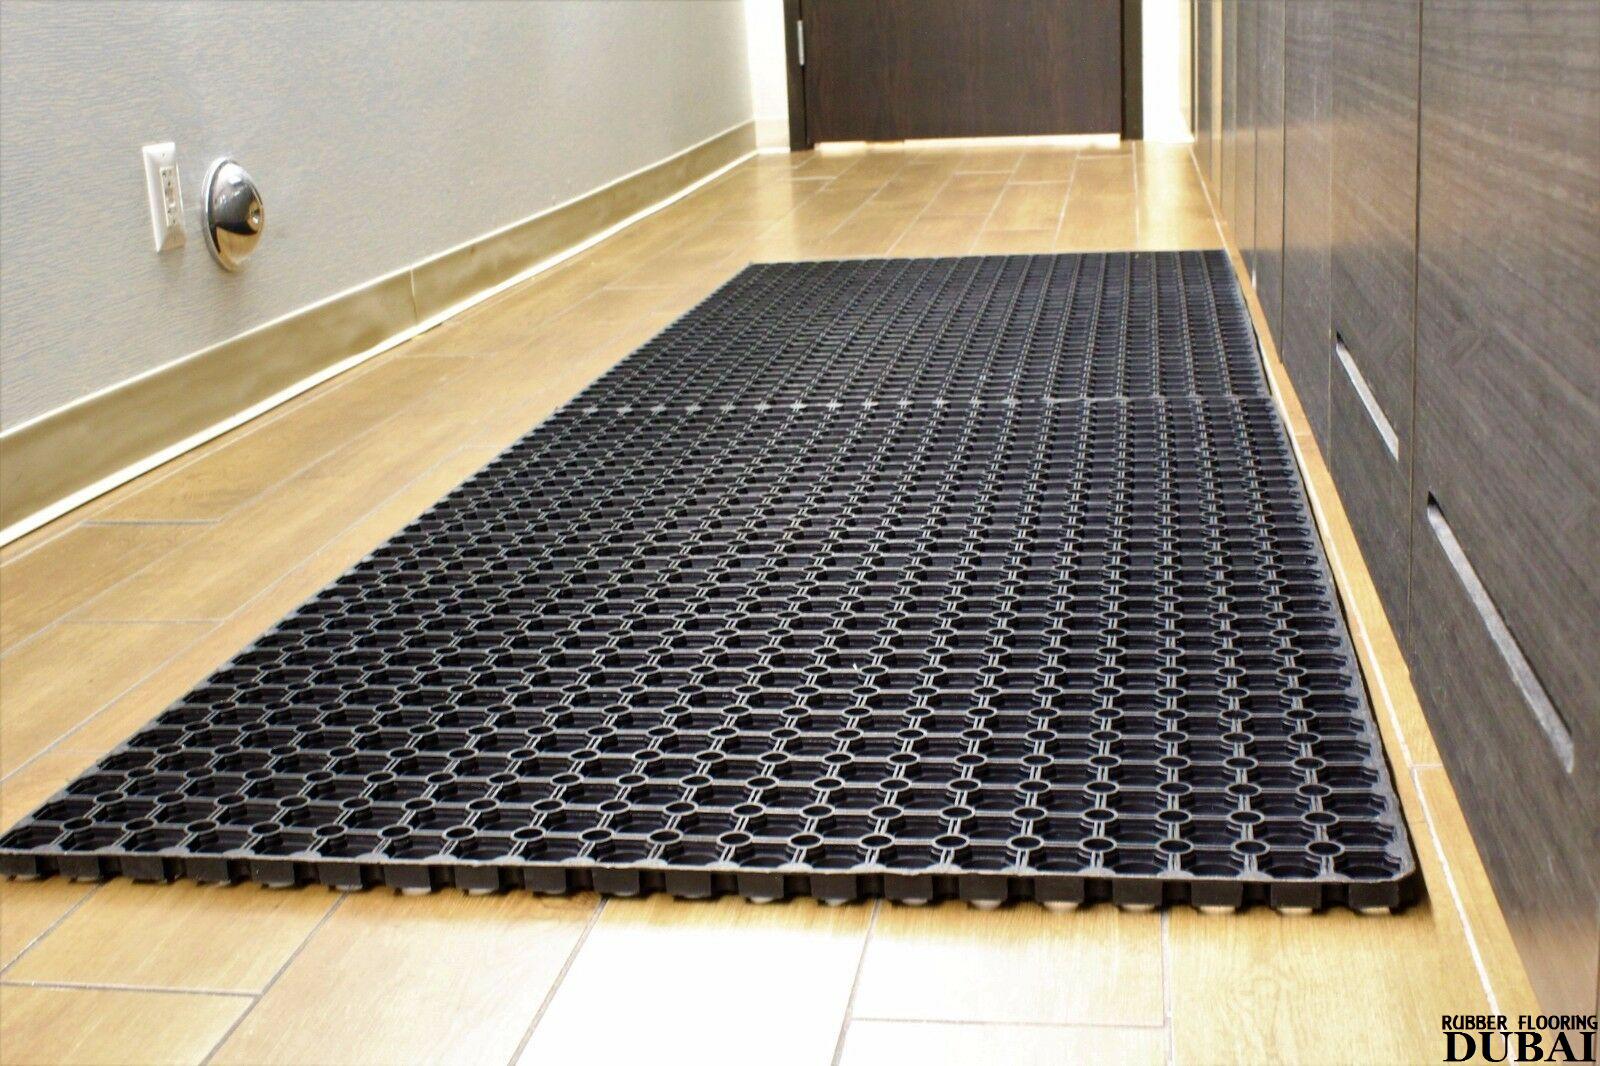 rubber floor mat for kitchen sink